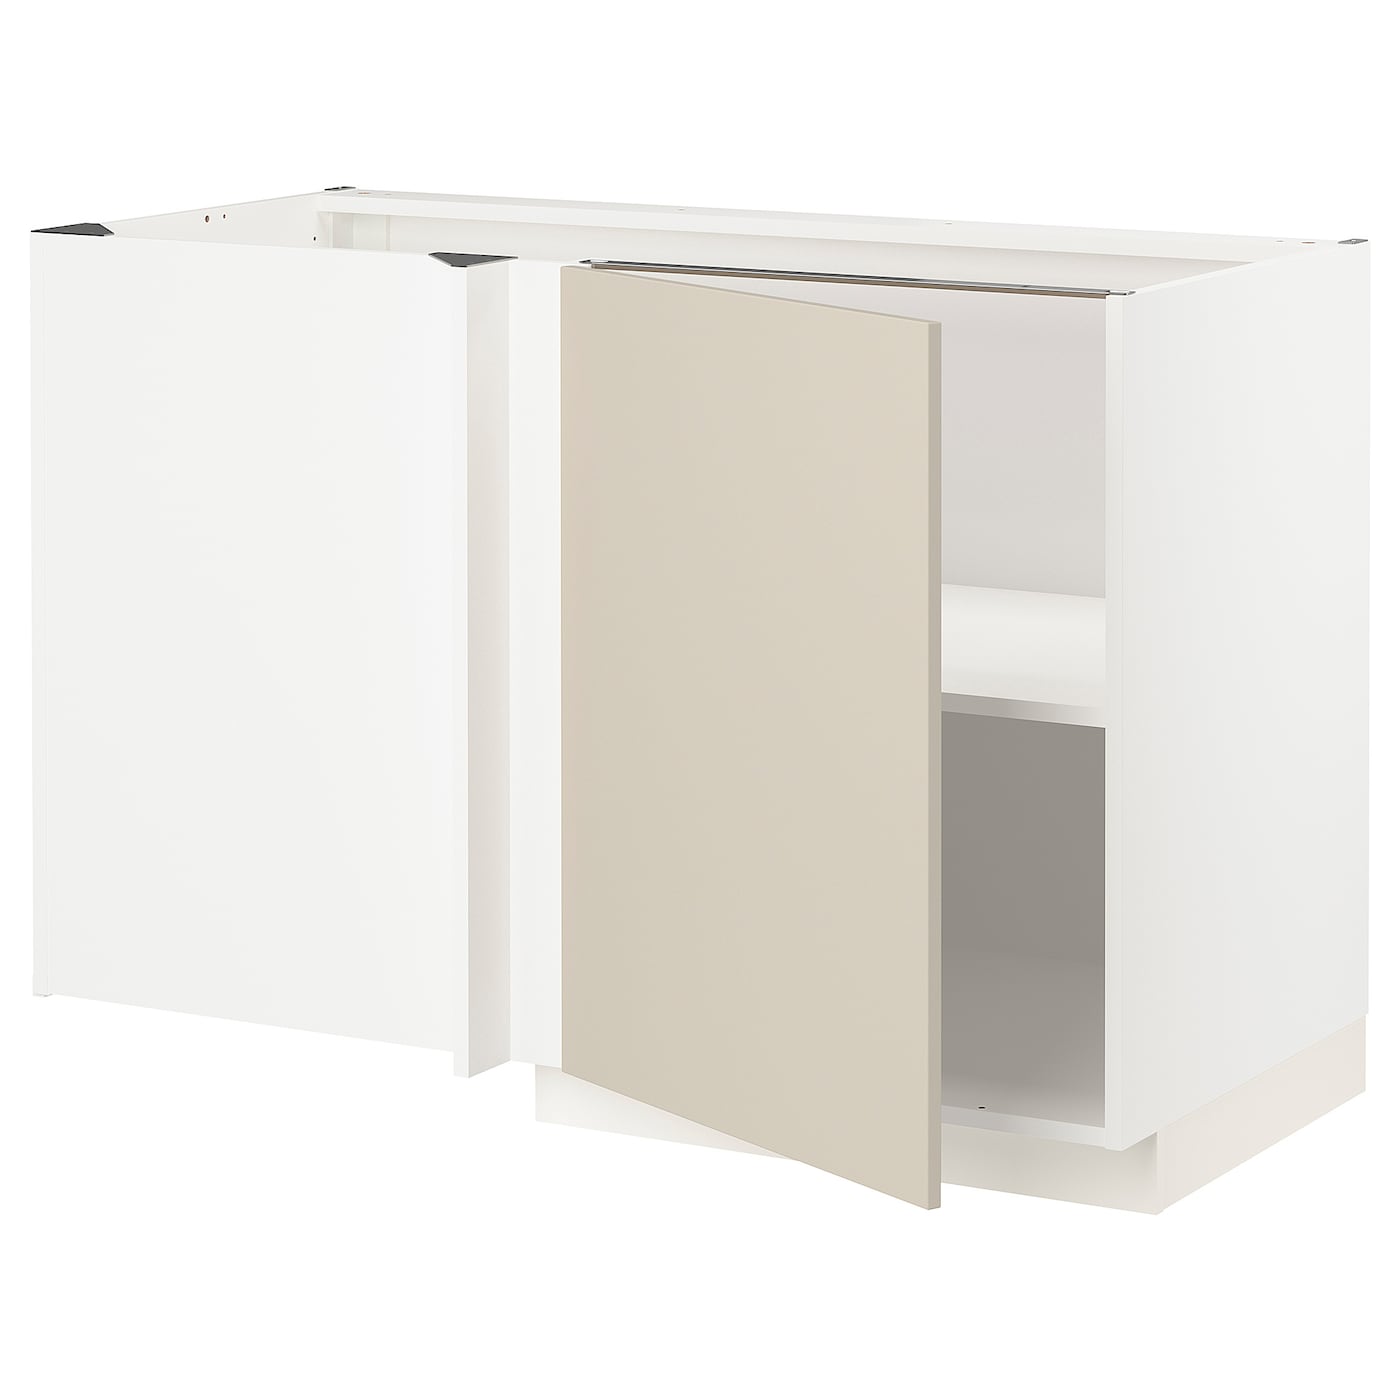 Угловой шкаф-тумба с полкой - IKEA METOD/МЕТОД ИКЕА, 128х68 см, белый/бежевый